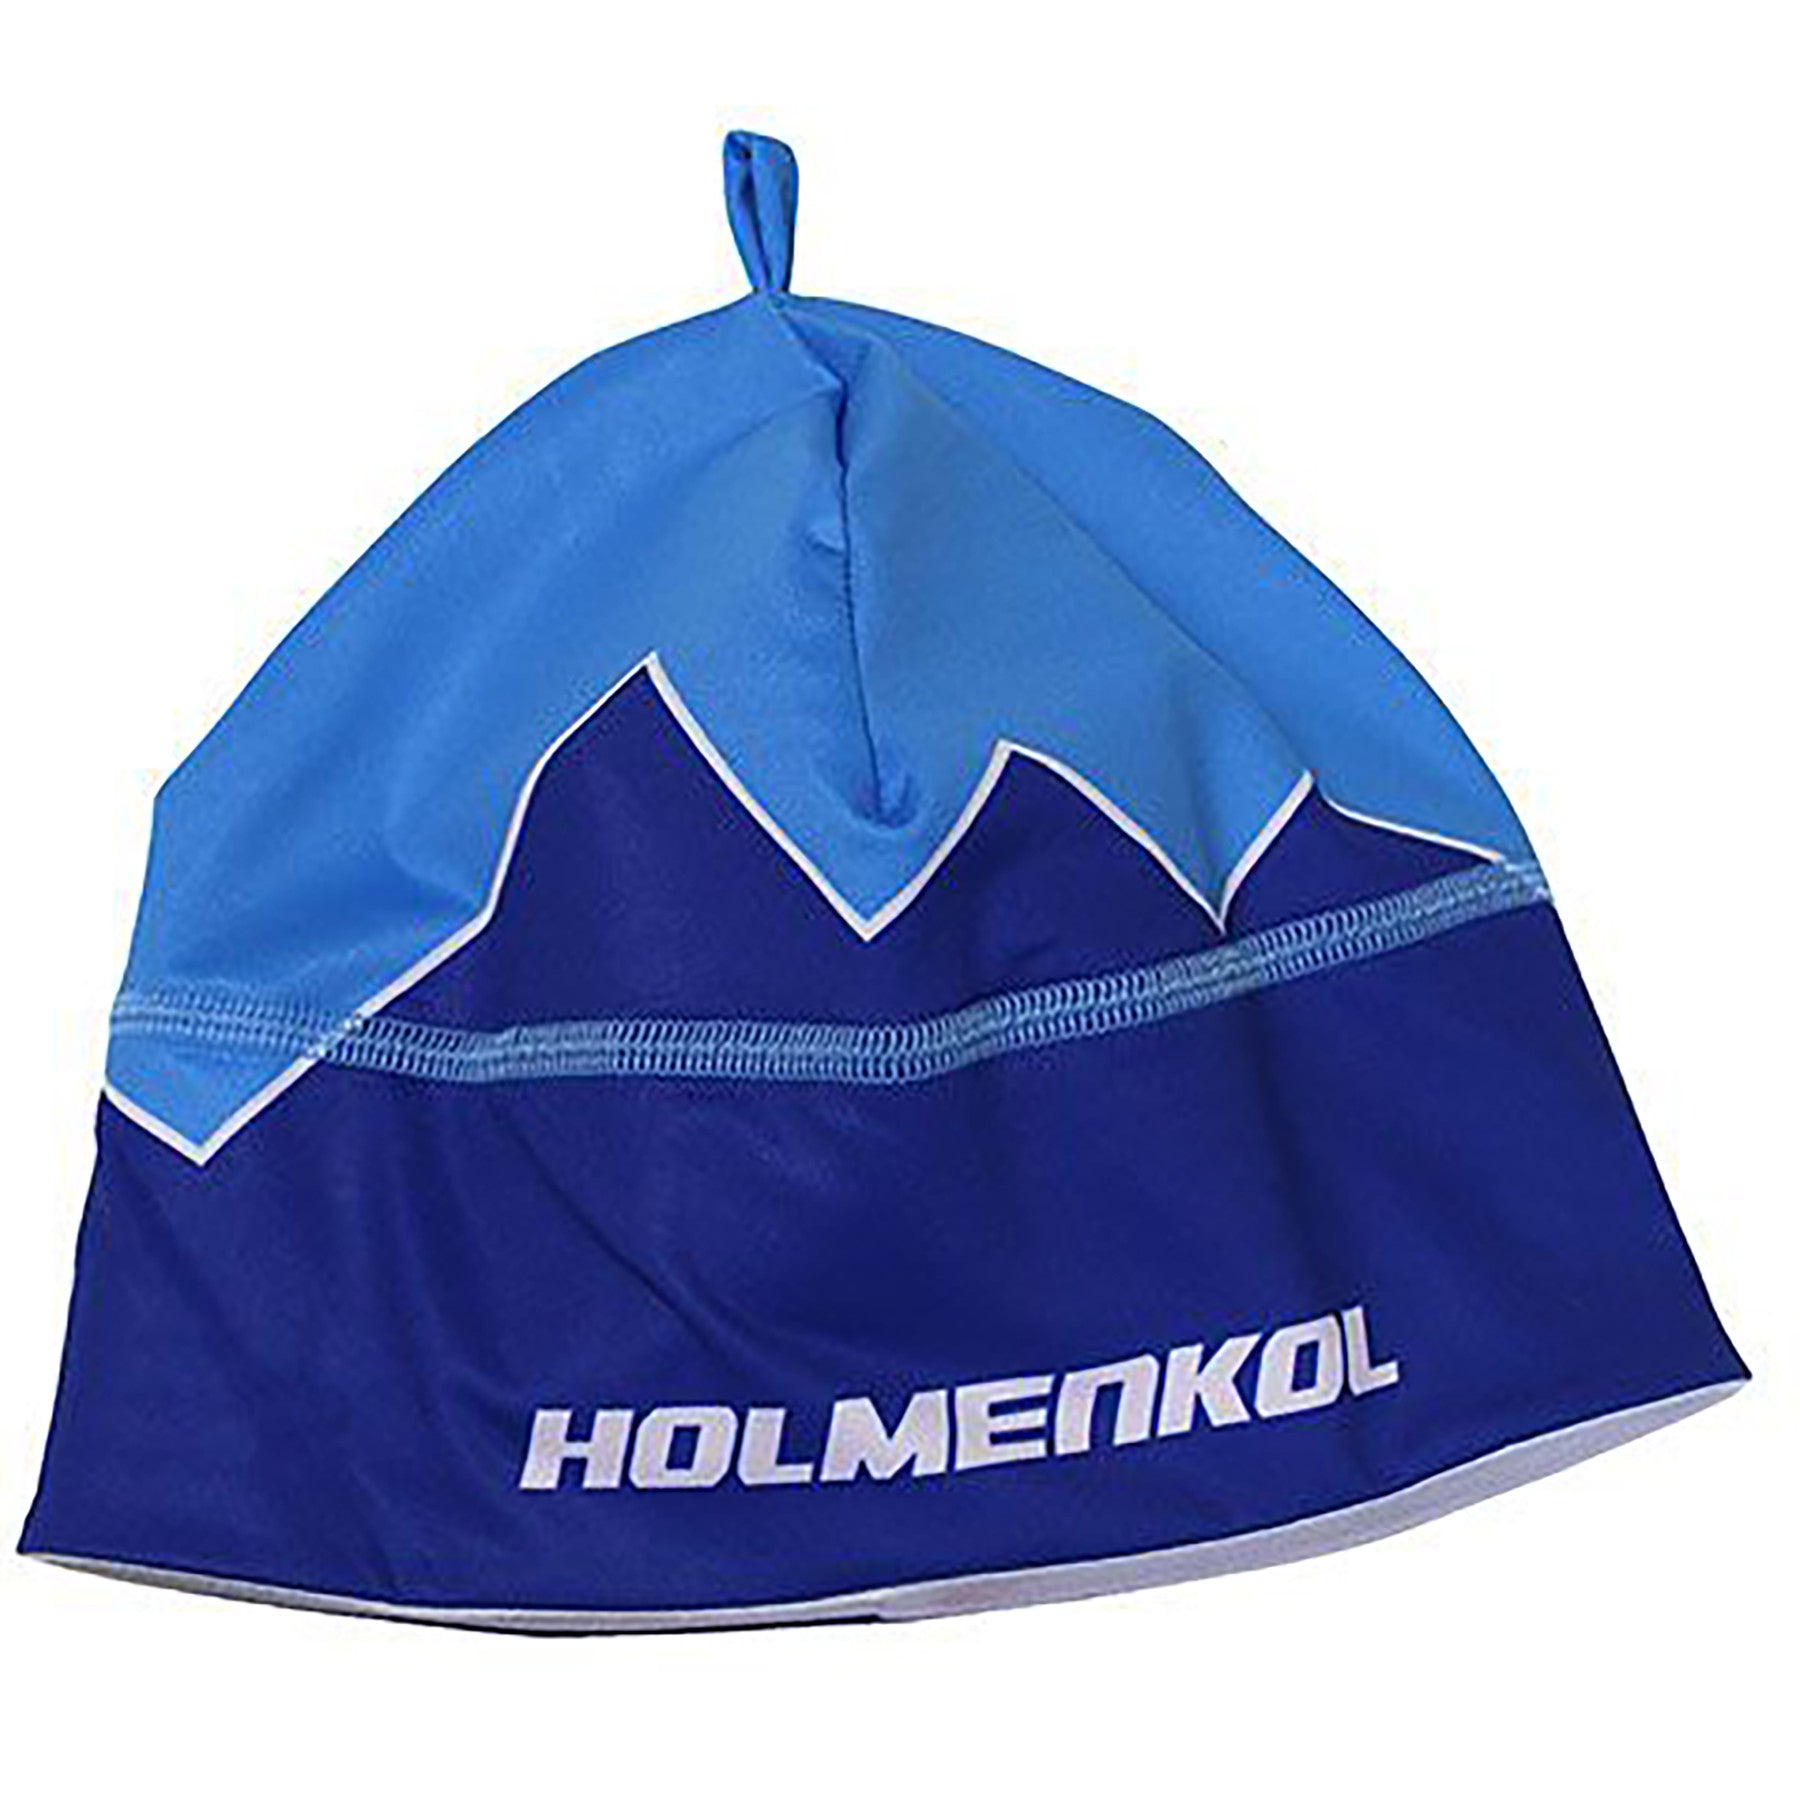 Holmenkol Nordic Race Cap Size M